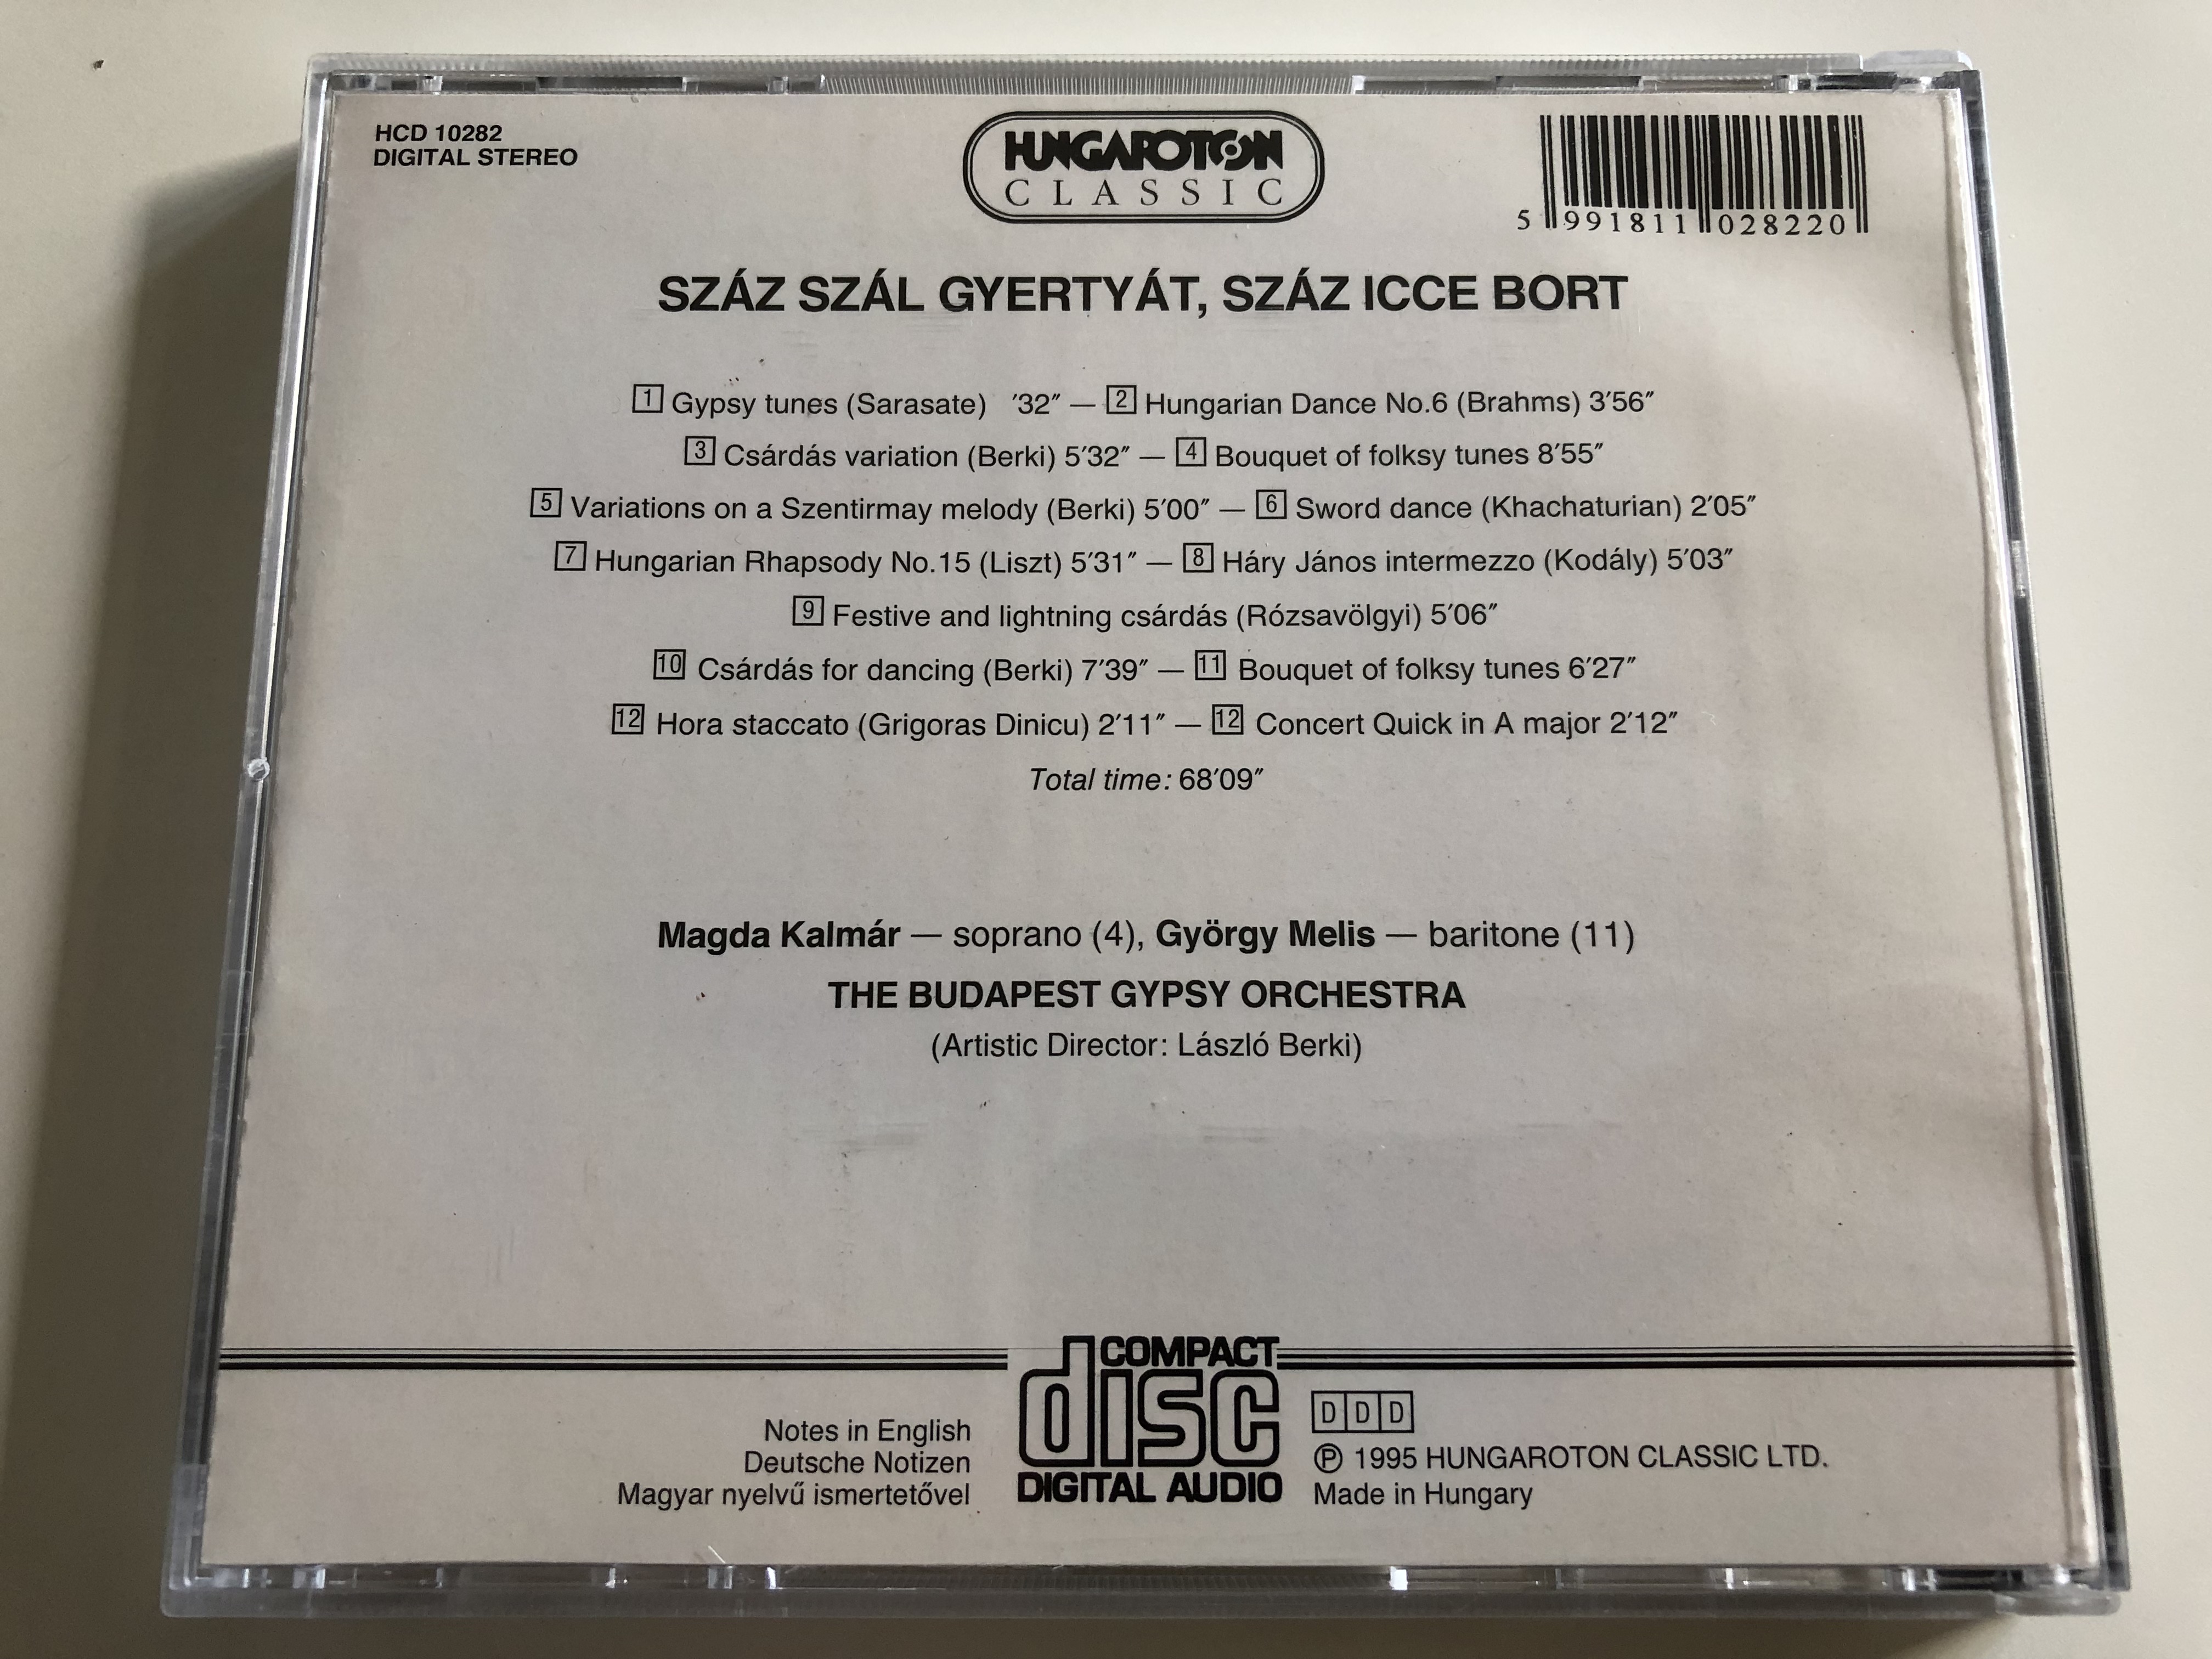 sz-z-sz-l-gyert-t-sz-z-icce-bort-magda-kalm-r-gy-rgy-melis-the-budapest-gypsy-orchestra-100-tag-budapest-cig-nyzenekar-hungaroton-classic-audio-cd-1995-7-.jpg